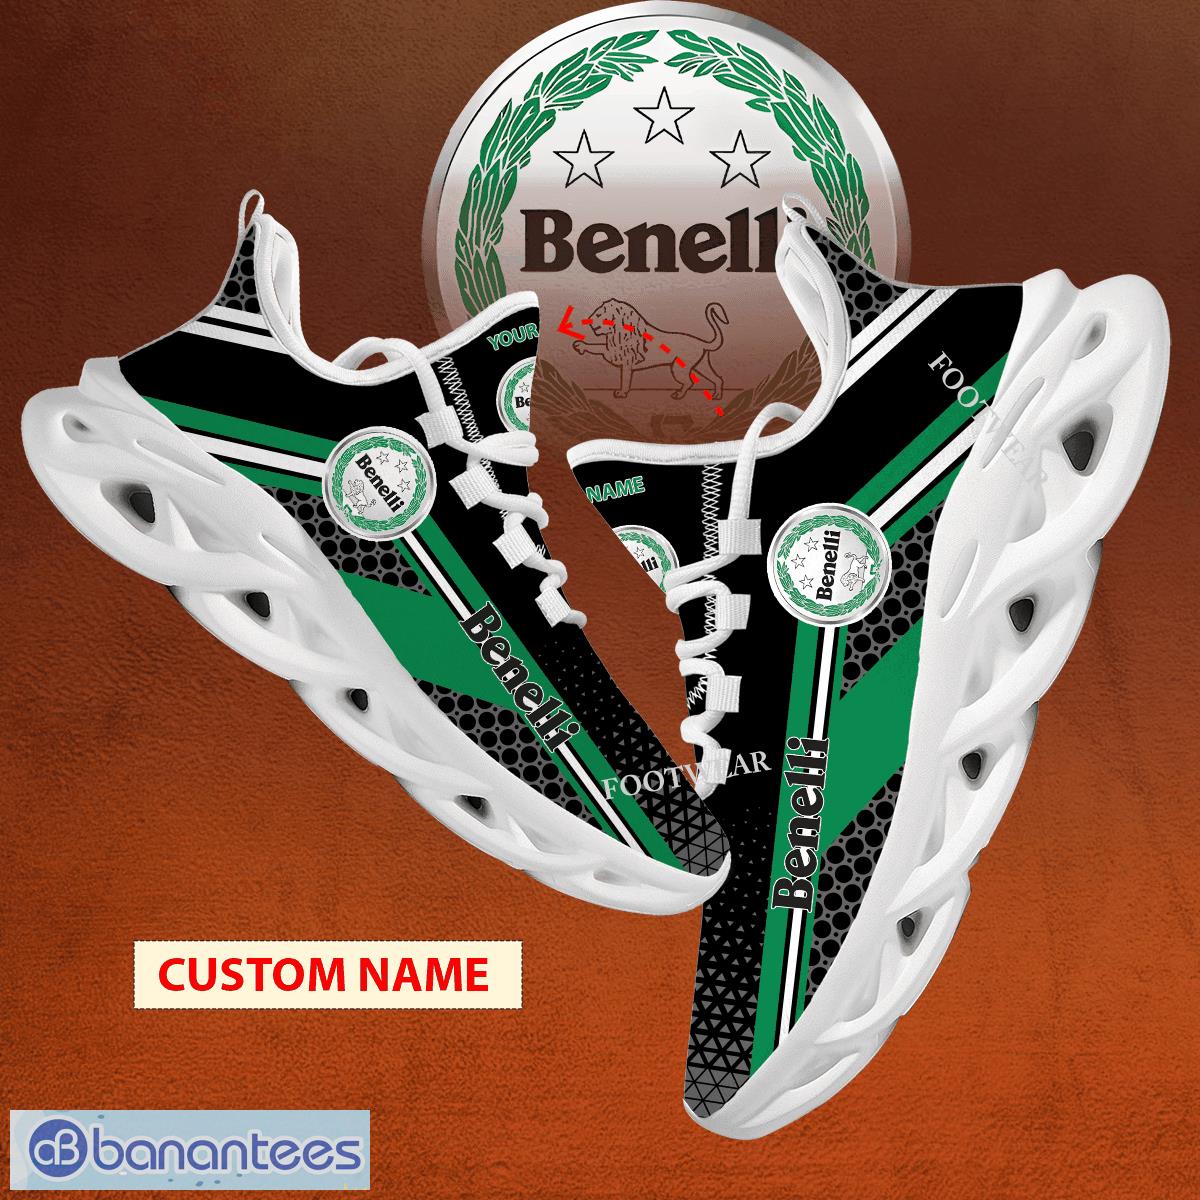 Benelli Logo Sticker, No Background White Letters Only. | eBay